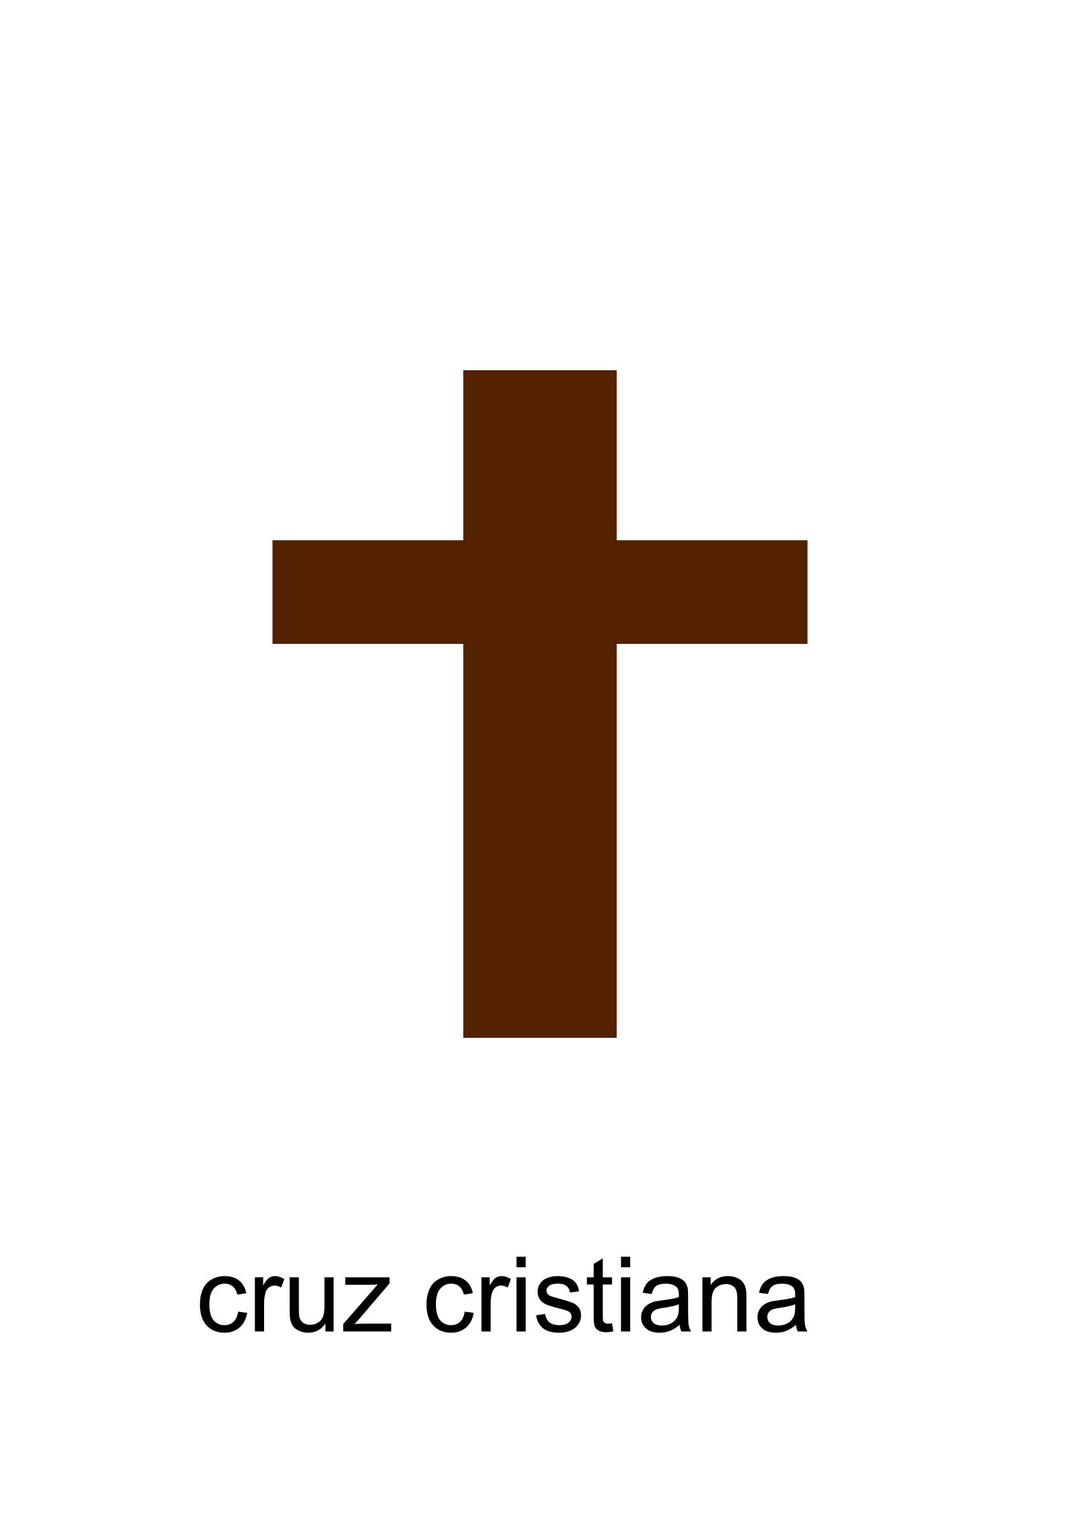 cruz cristiana png transparent